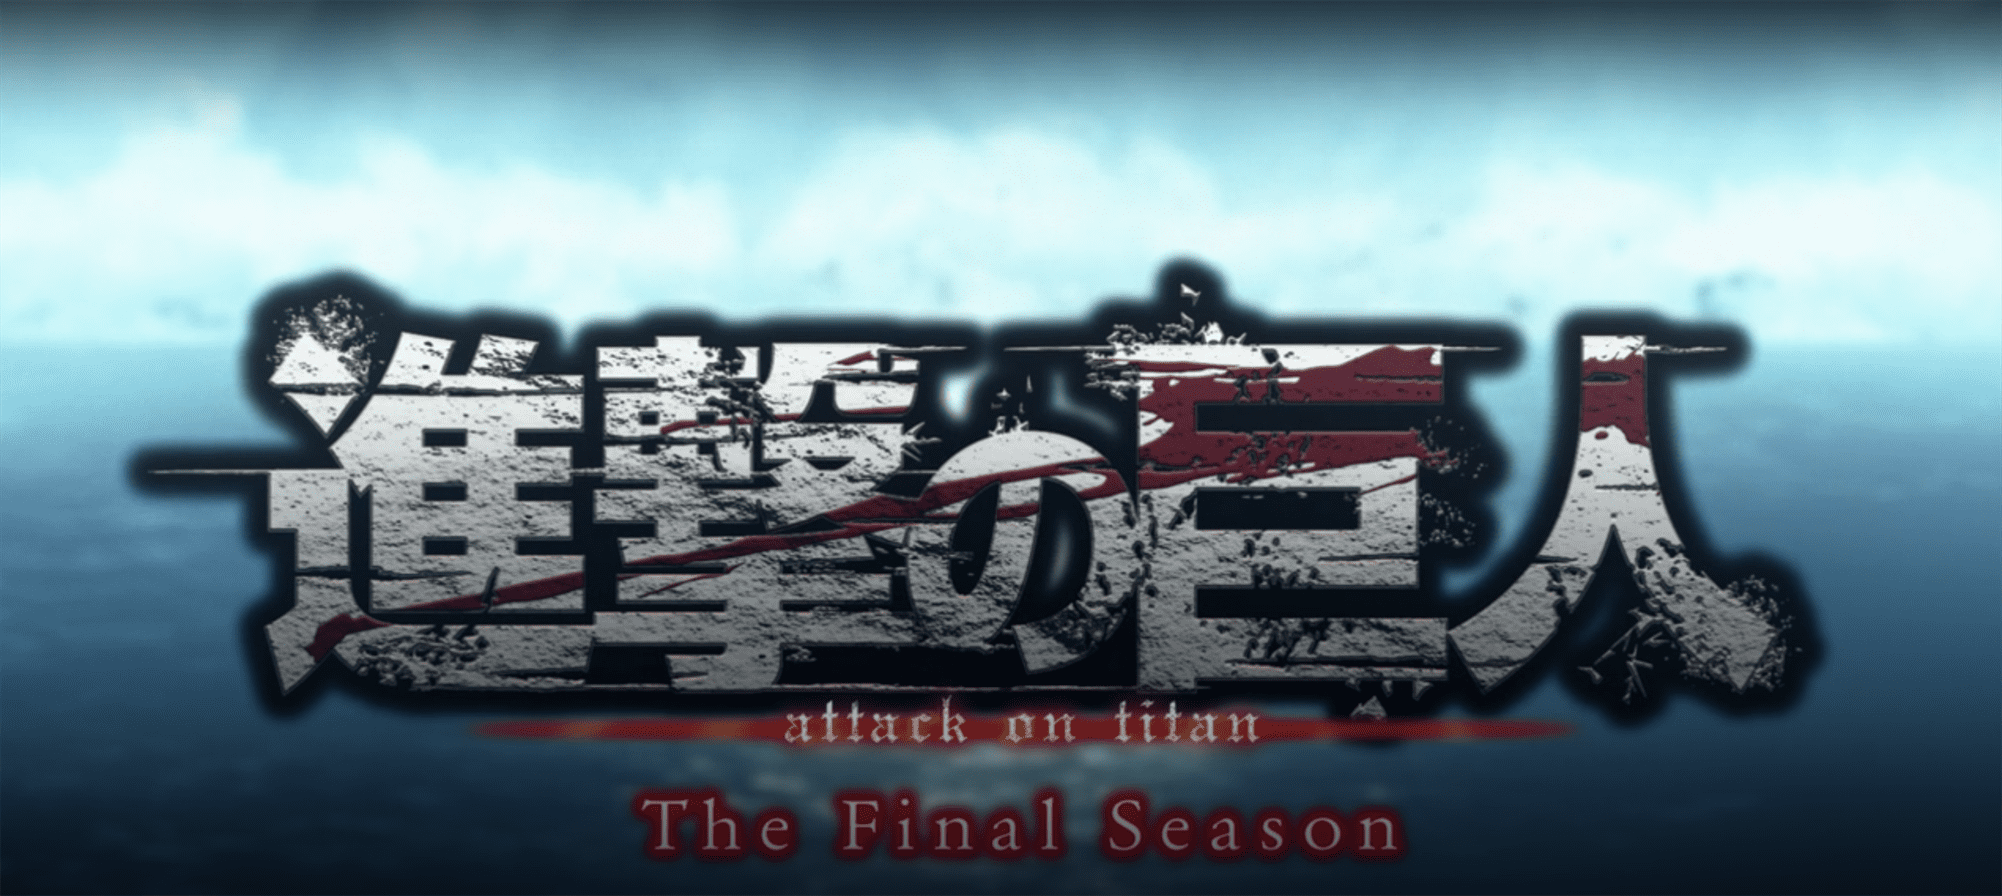 Attack On Titan Season 4 Finale Title Surfaces Online